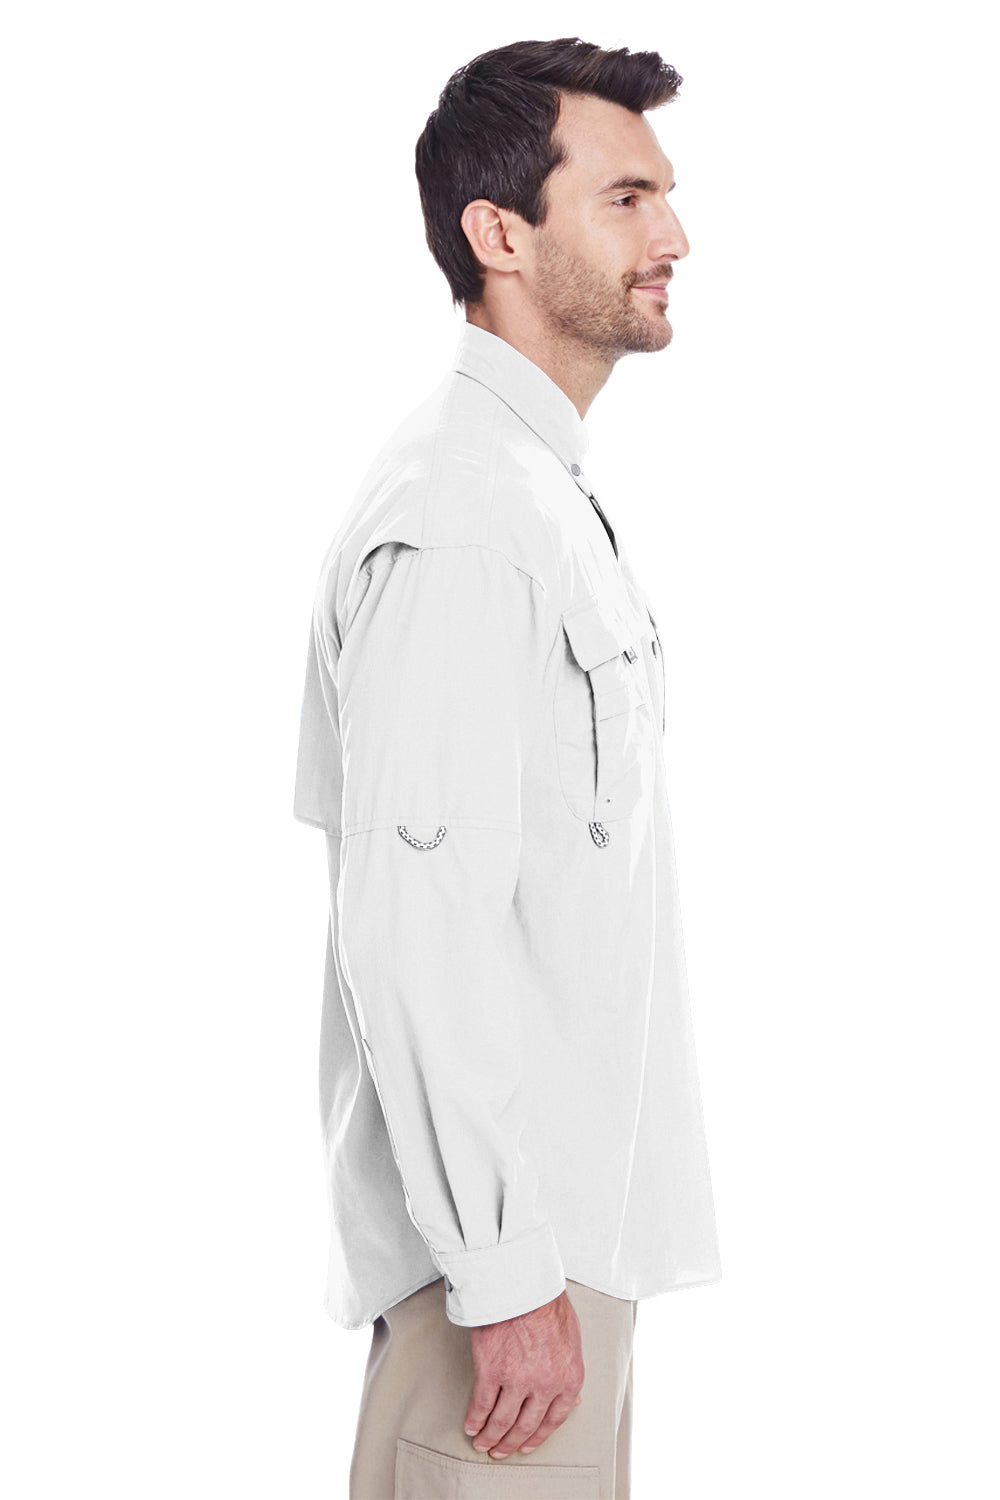 Columbia 7048 Mens Bahama II Moisture Wicking Long Sleeve Button Down Shirt w/ Double Pockets White Side